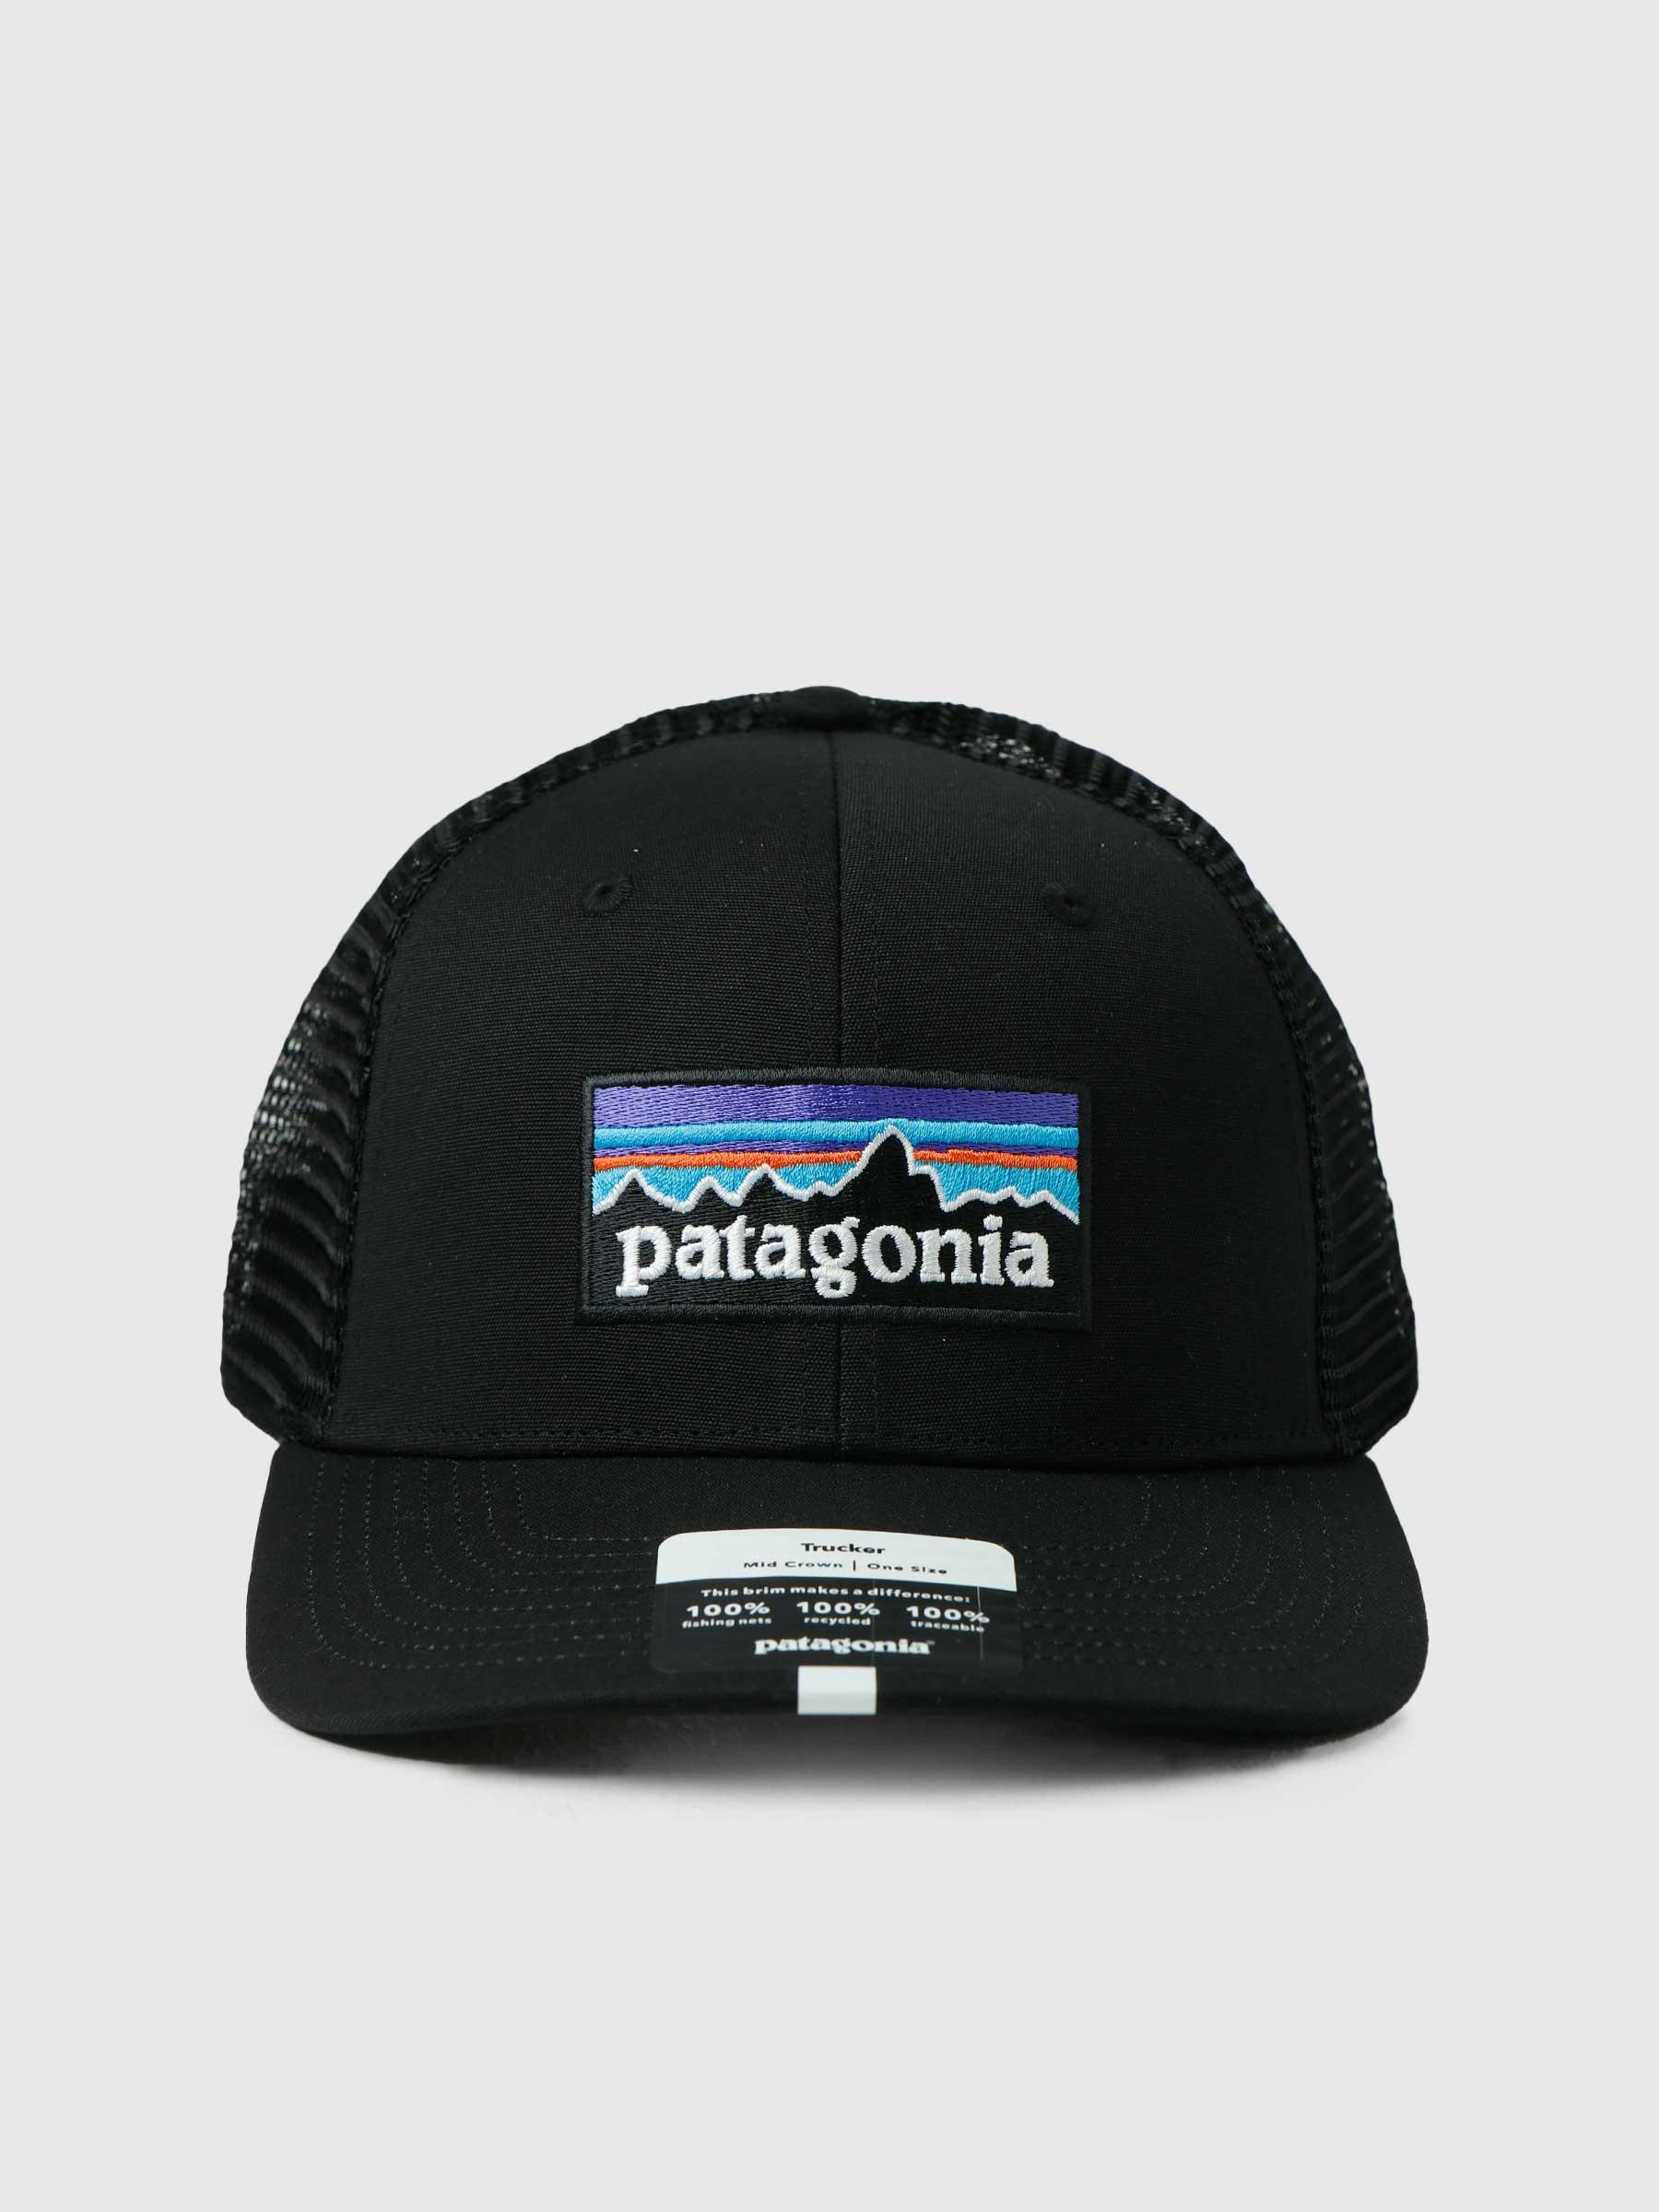 Patagonia P 6 Logo Trucker Hat Black - Freshcotton